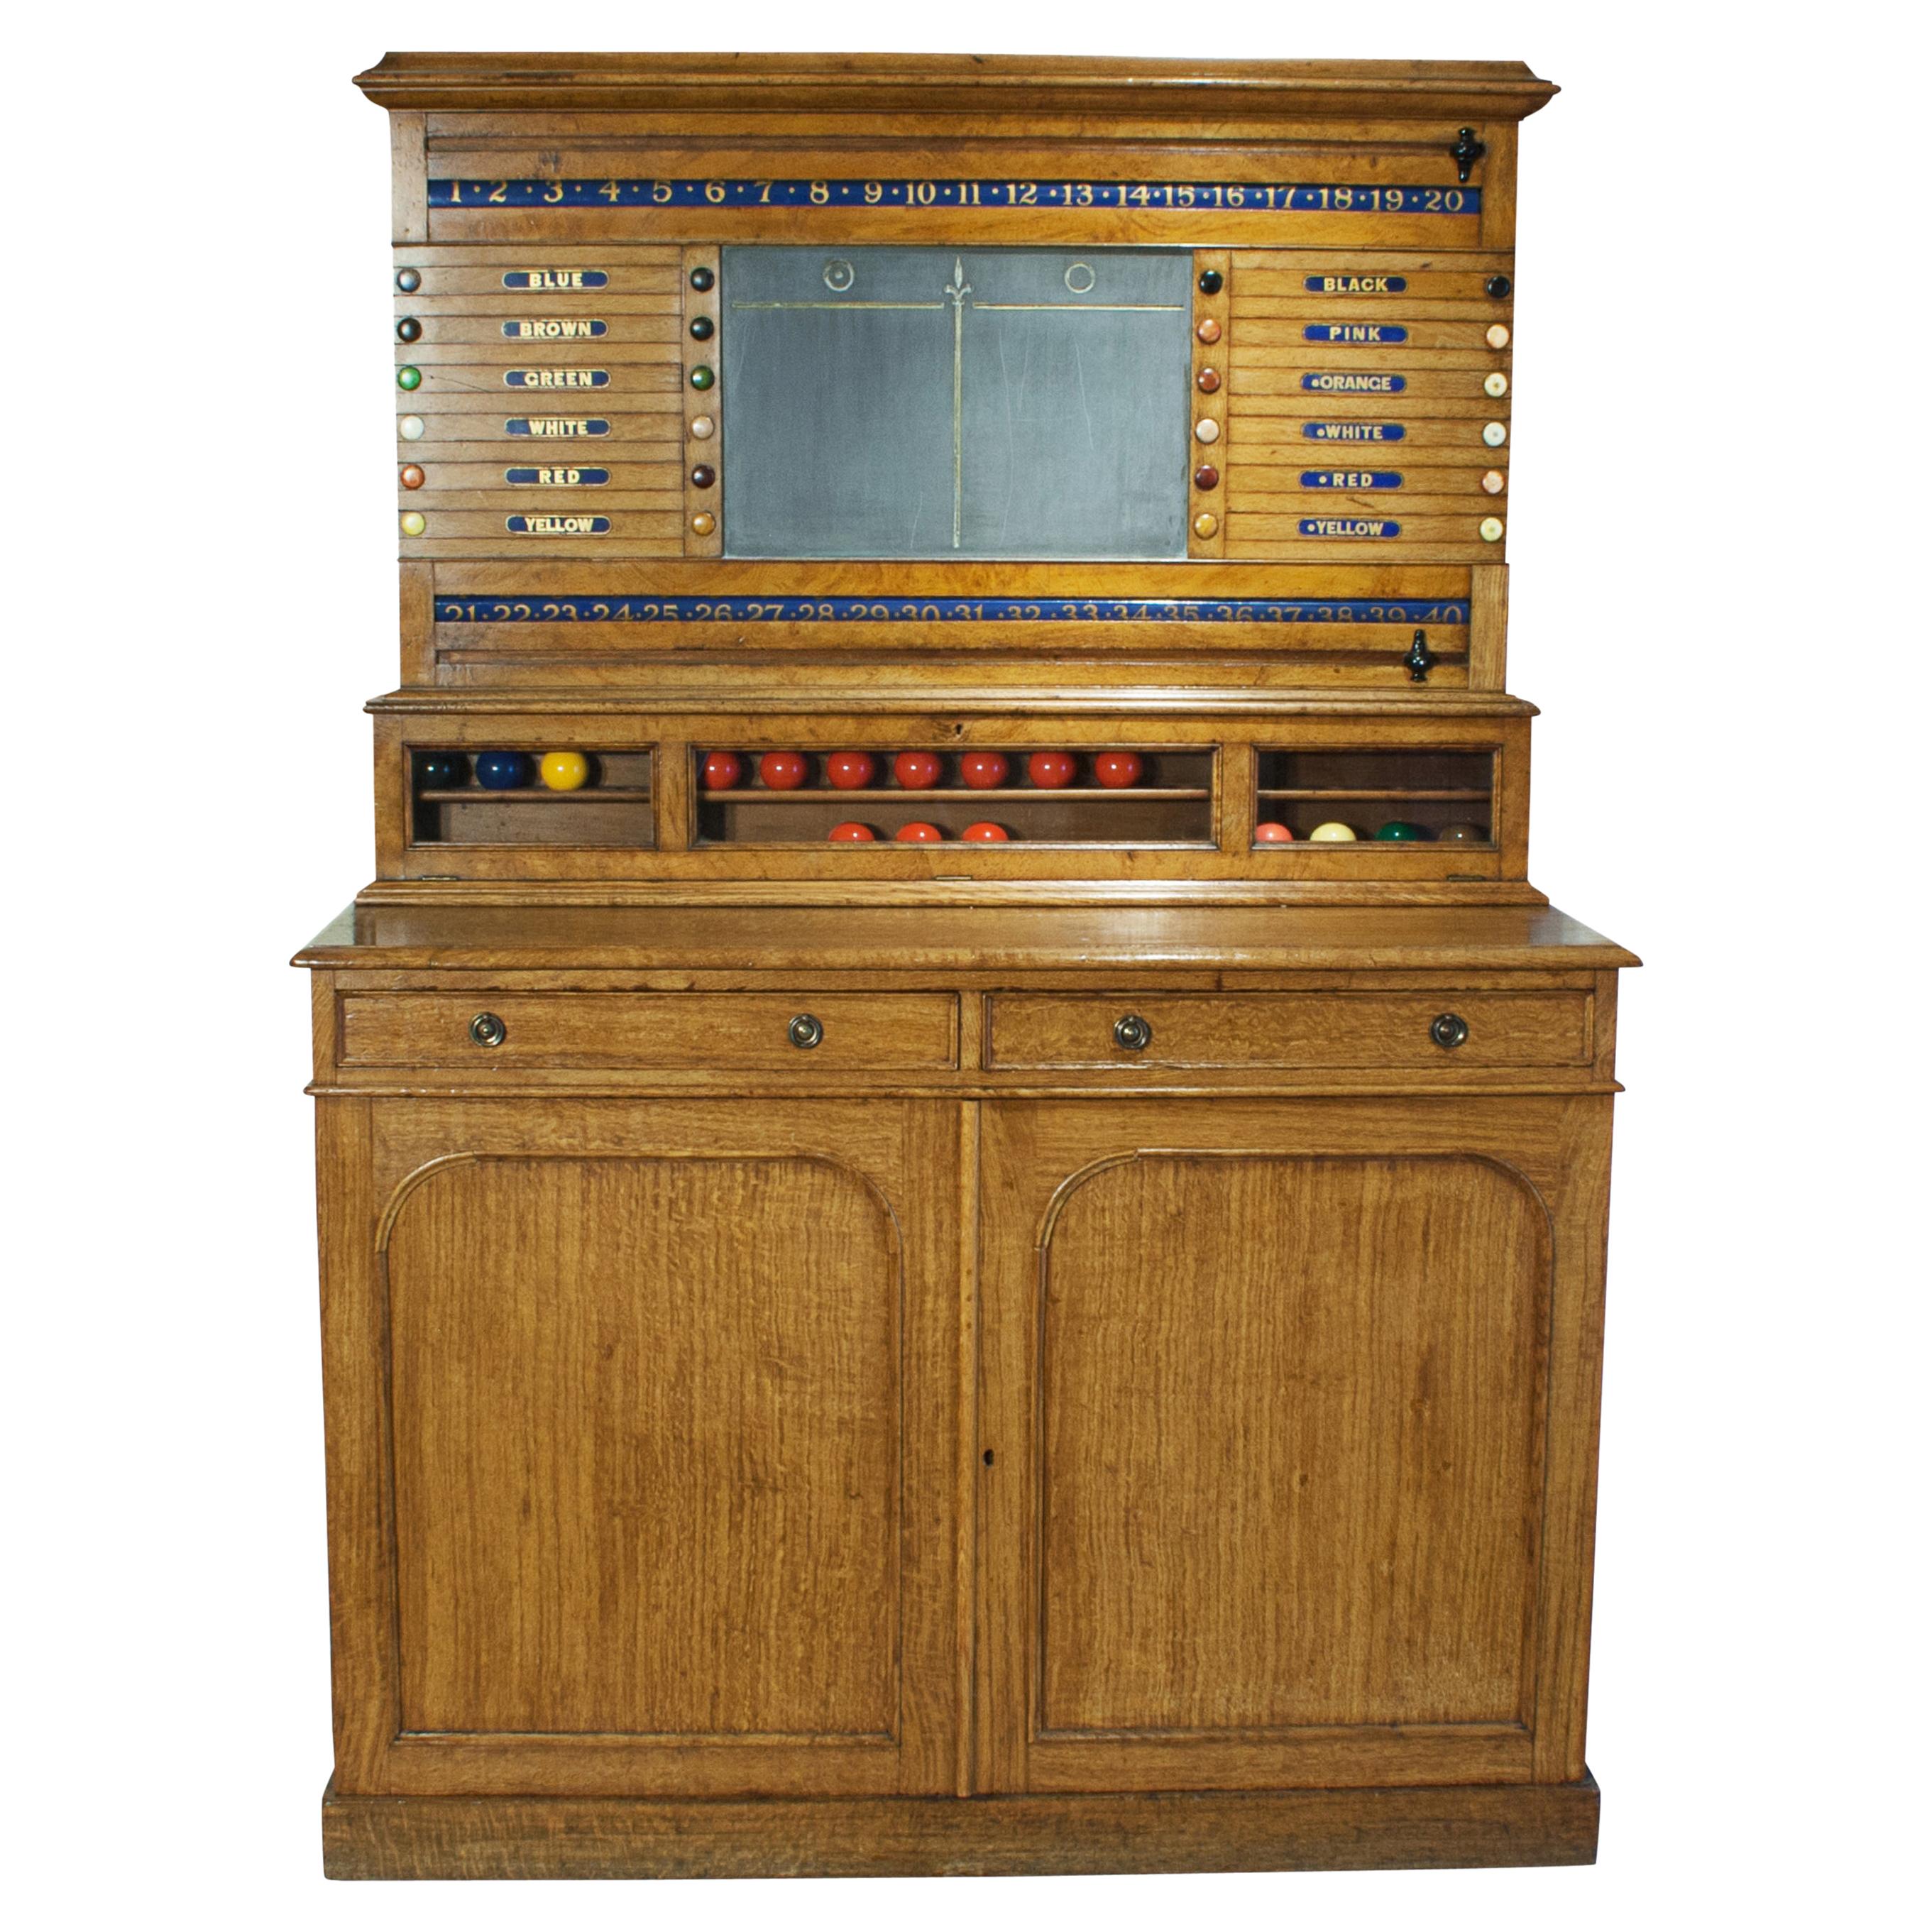 Victorian Oak Billiard, Lifepool Scoreboard with Cabinet For Sale